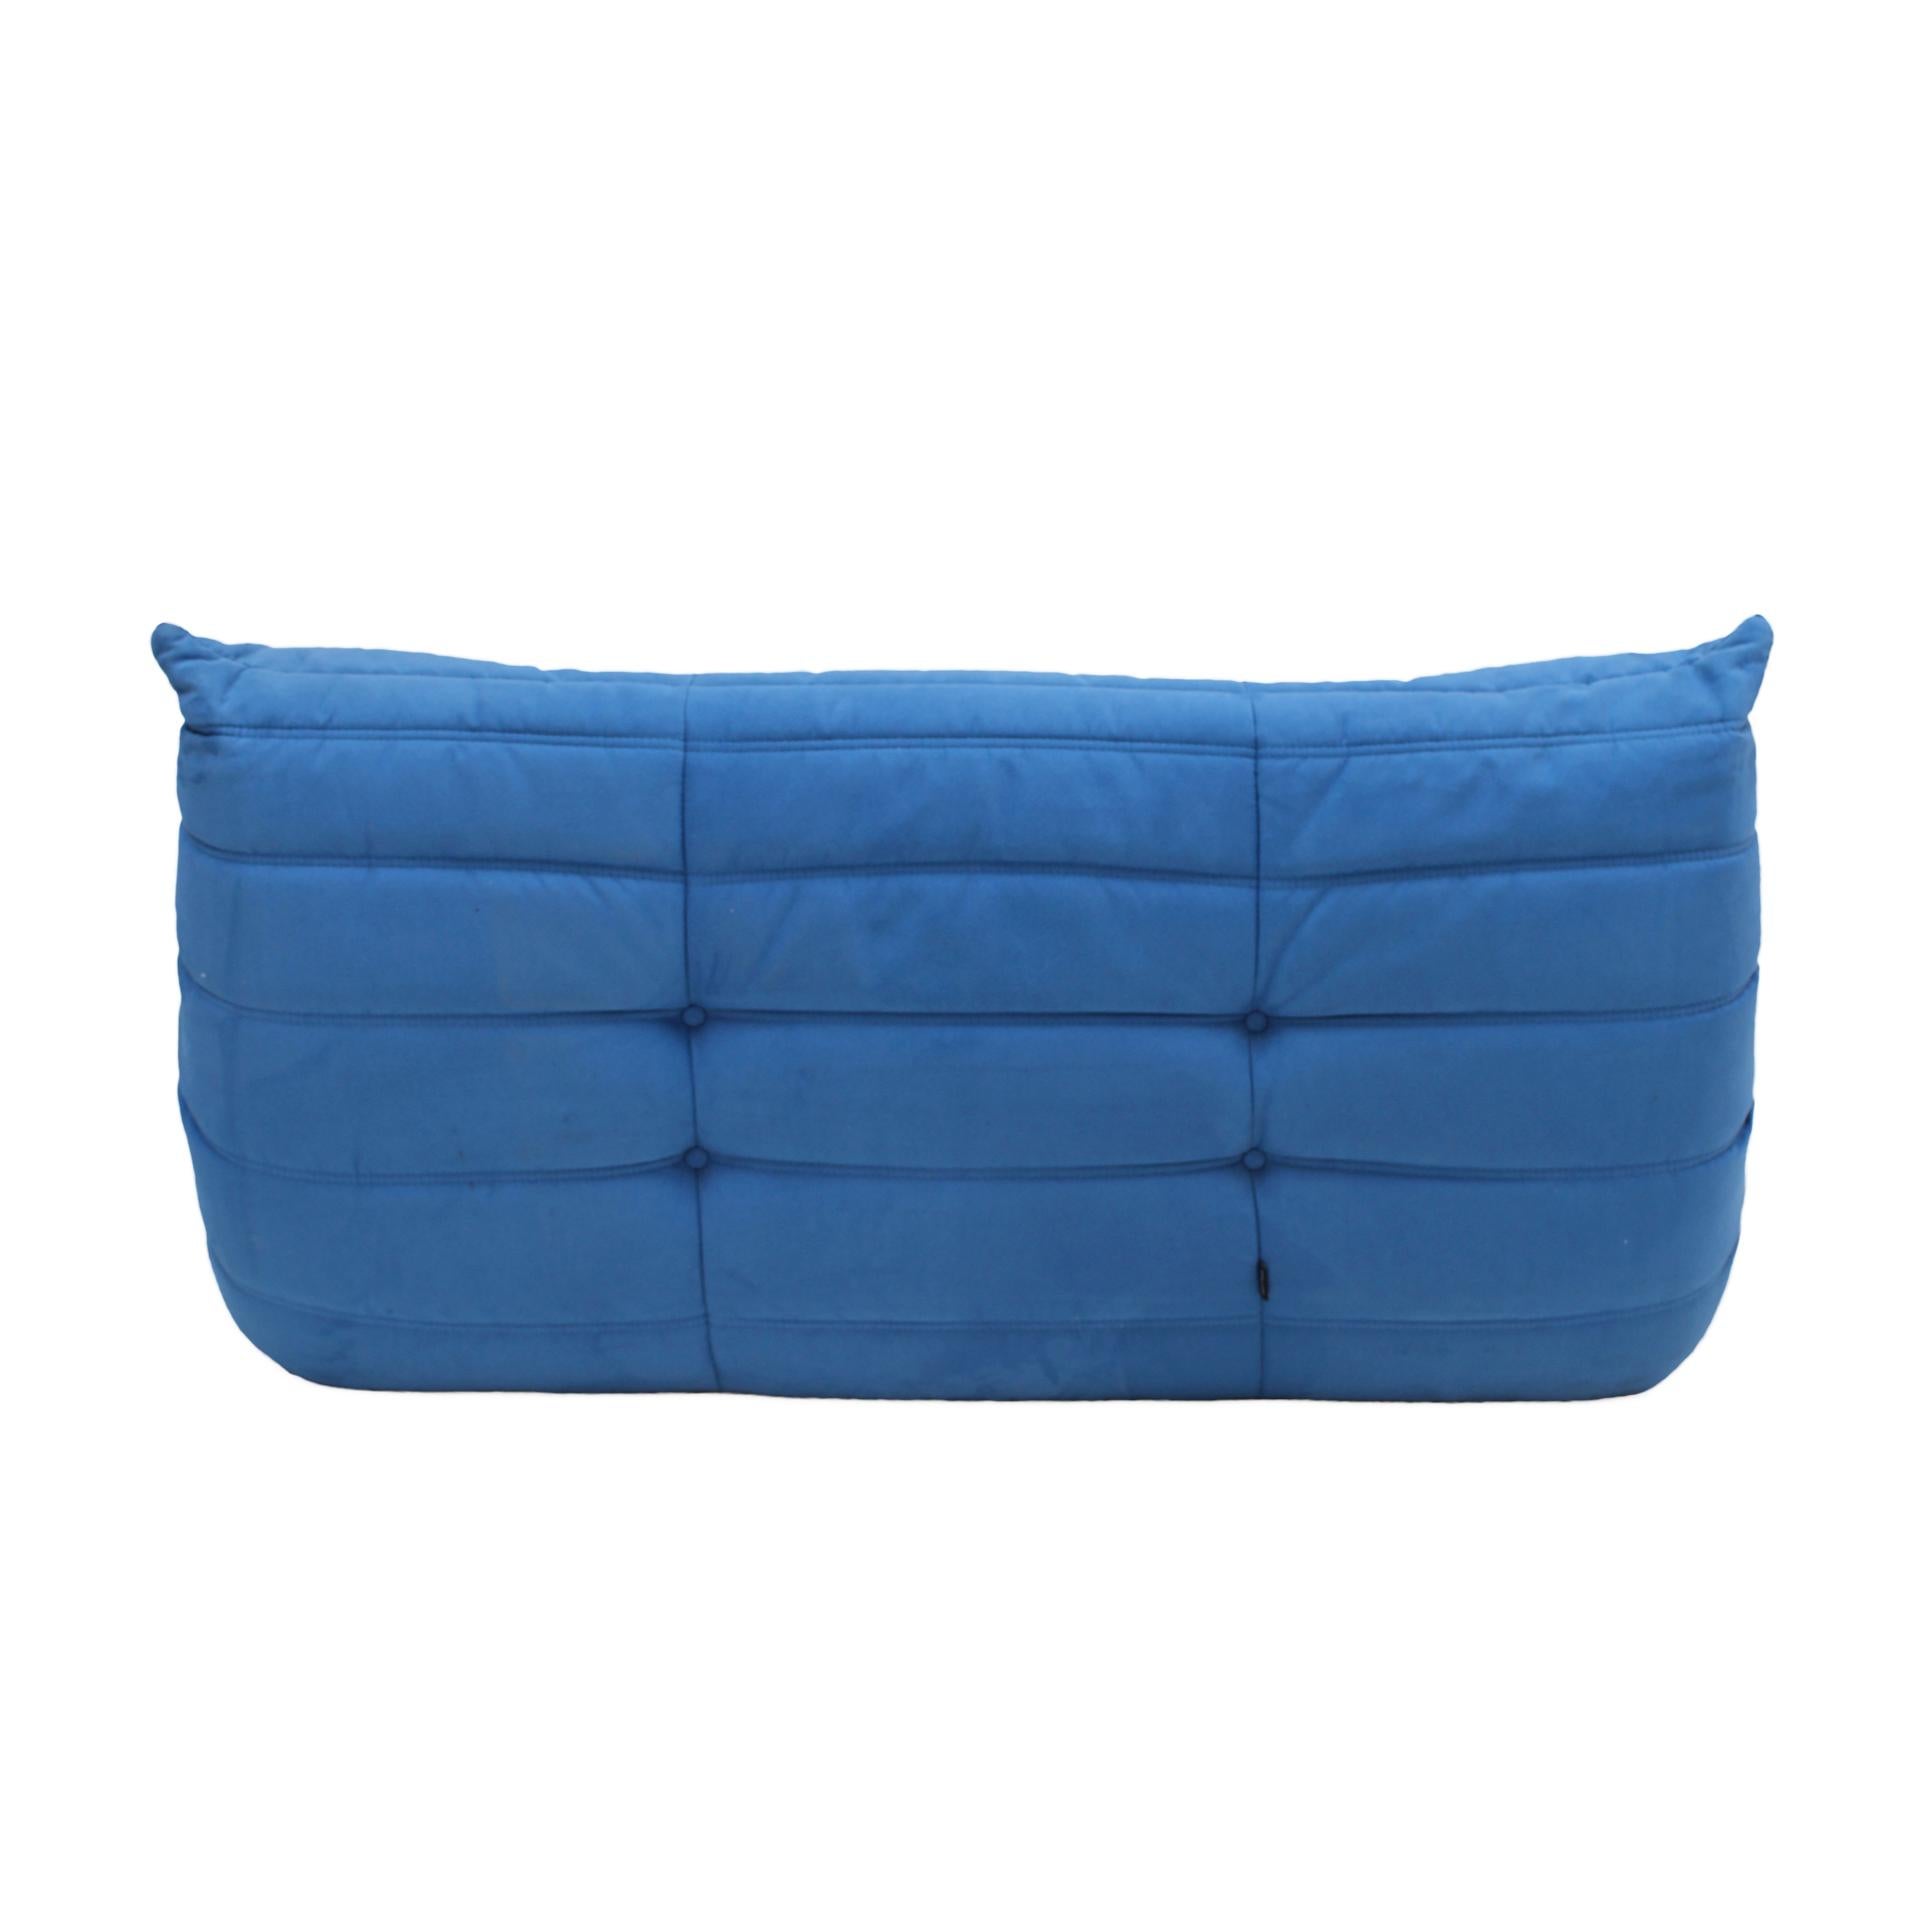 Mid-Century Modern Original Ligne Roset Togo Blue Cotton Velvet Sofa Designed by Michel Ducaroy